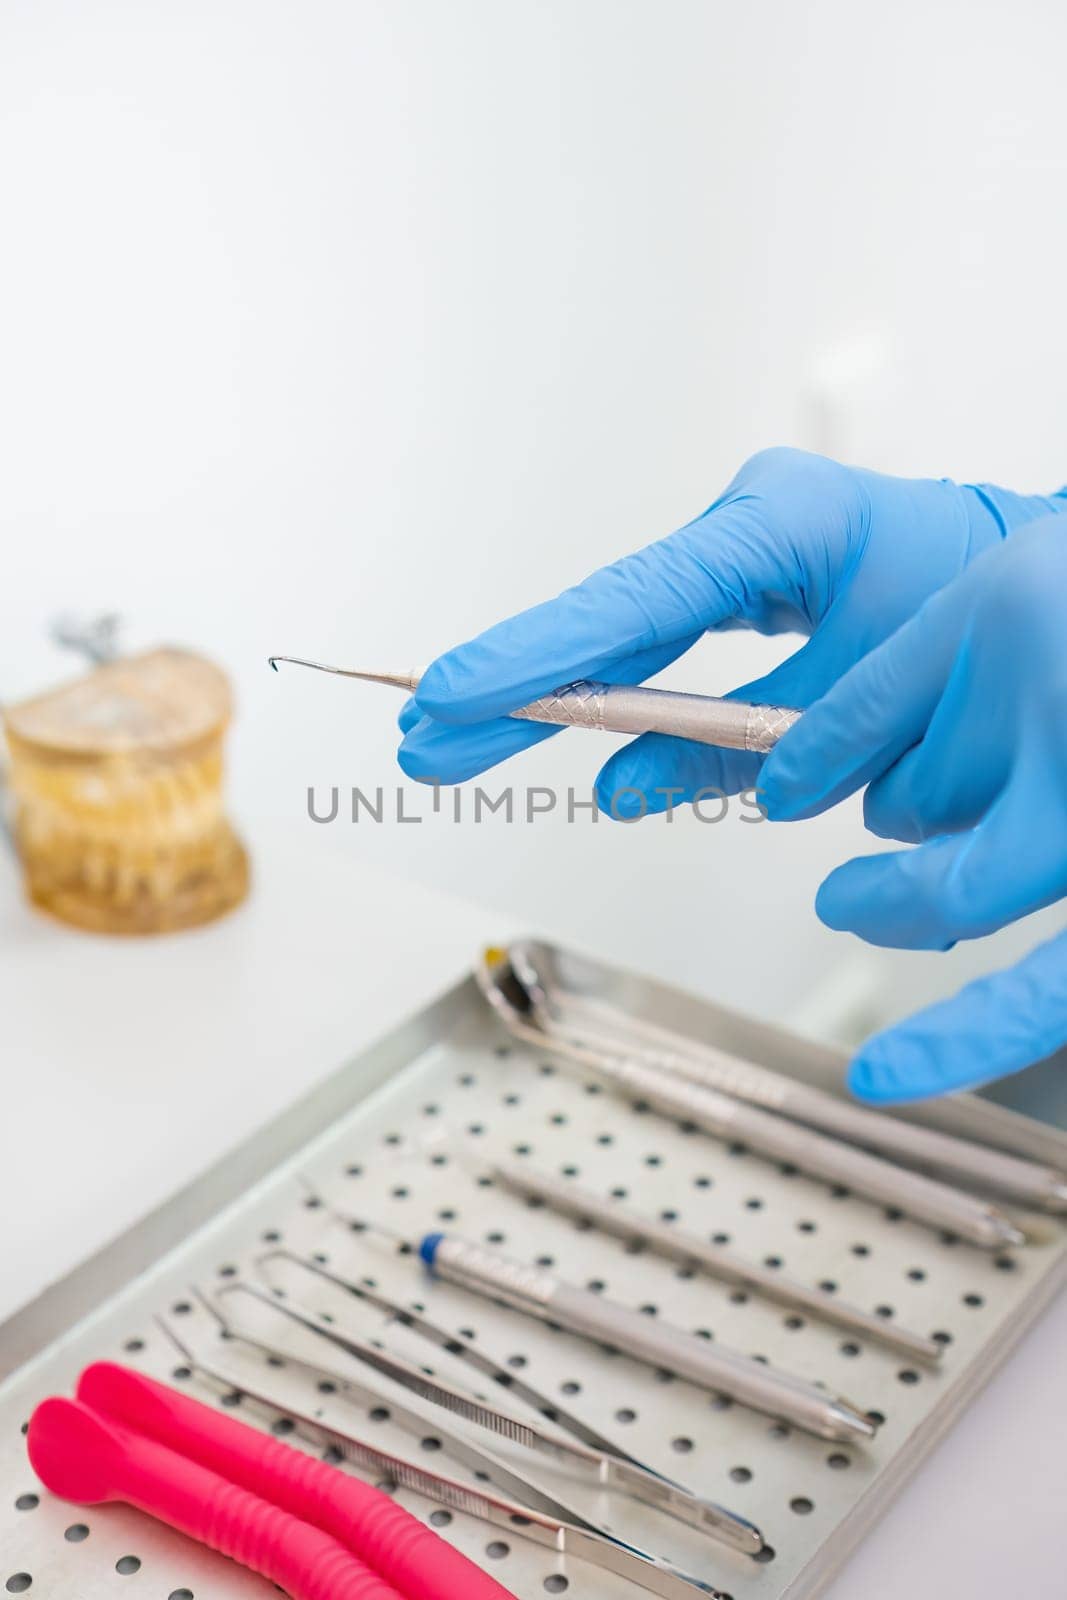 Dentists hands holding dental instruments for teeth treatment by vladimka